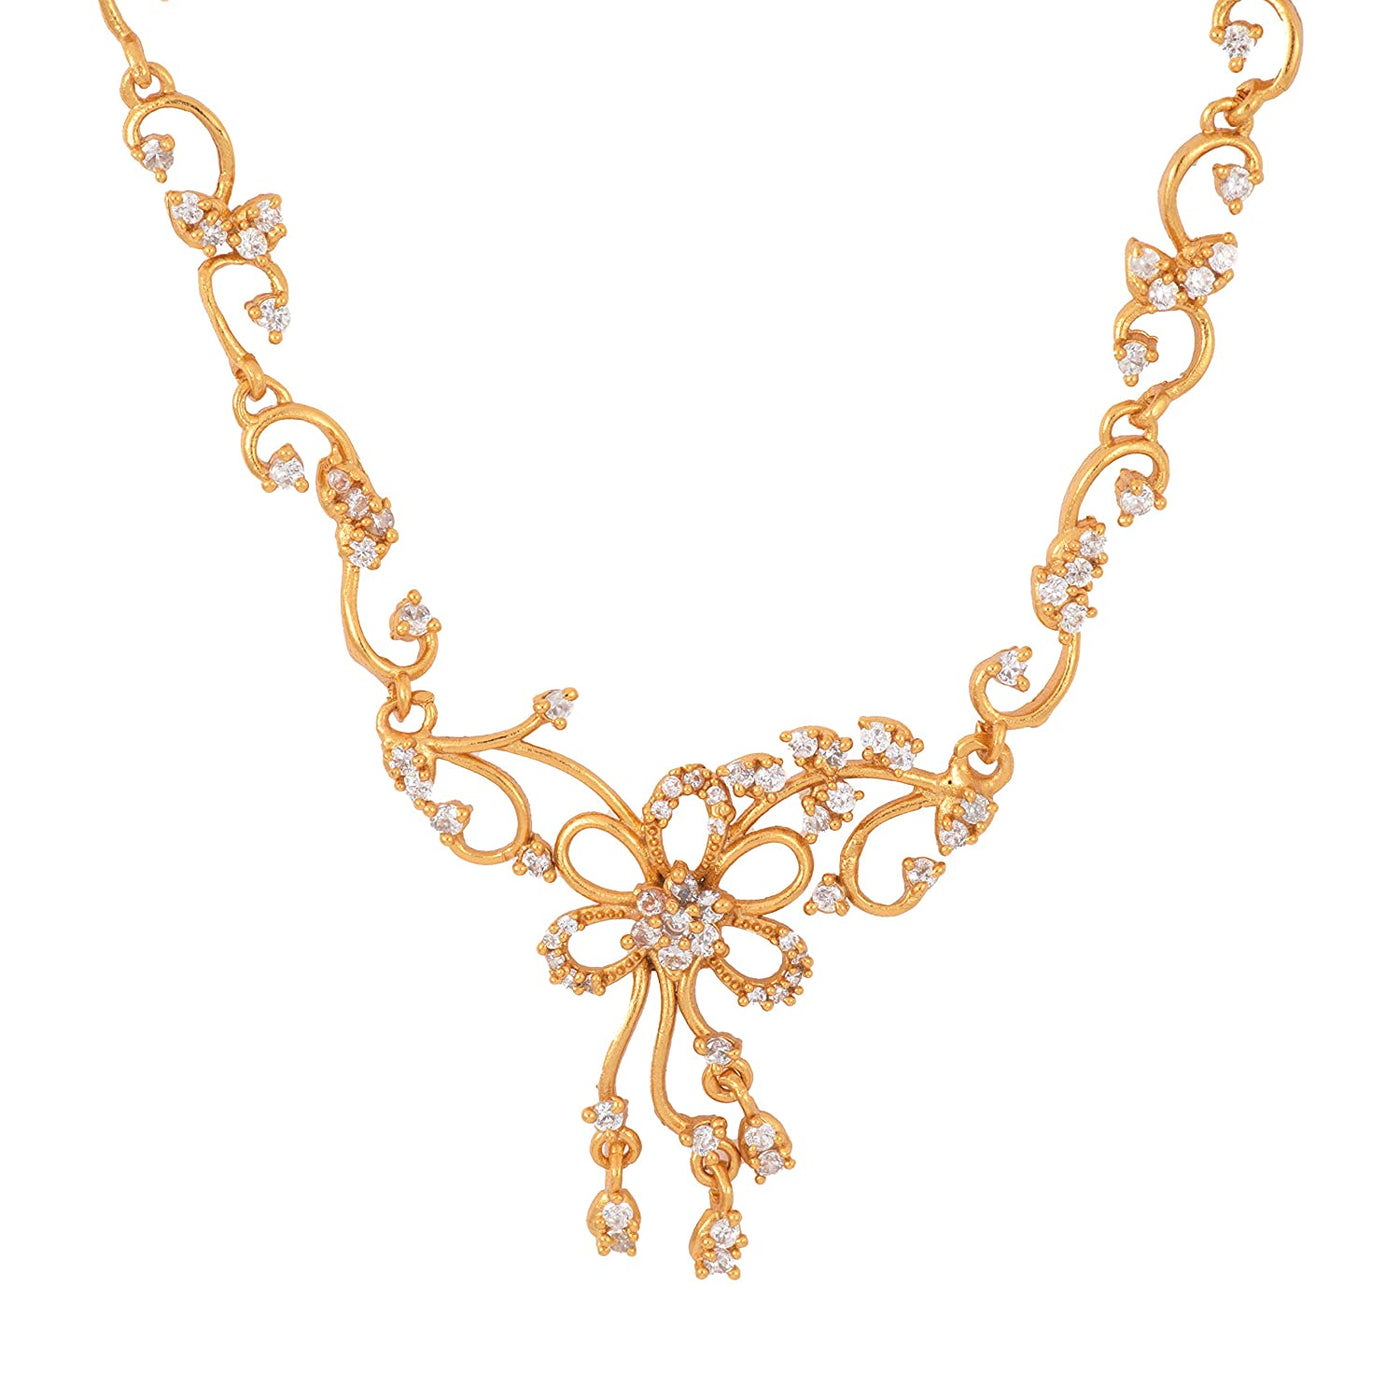 Estele - 24 Kt Gold Plated CZ Flower Shaped Necklace Set for Women